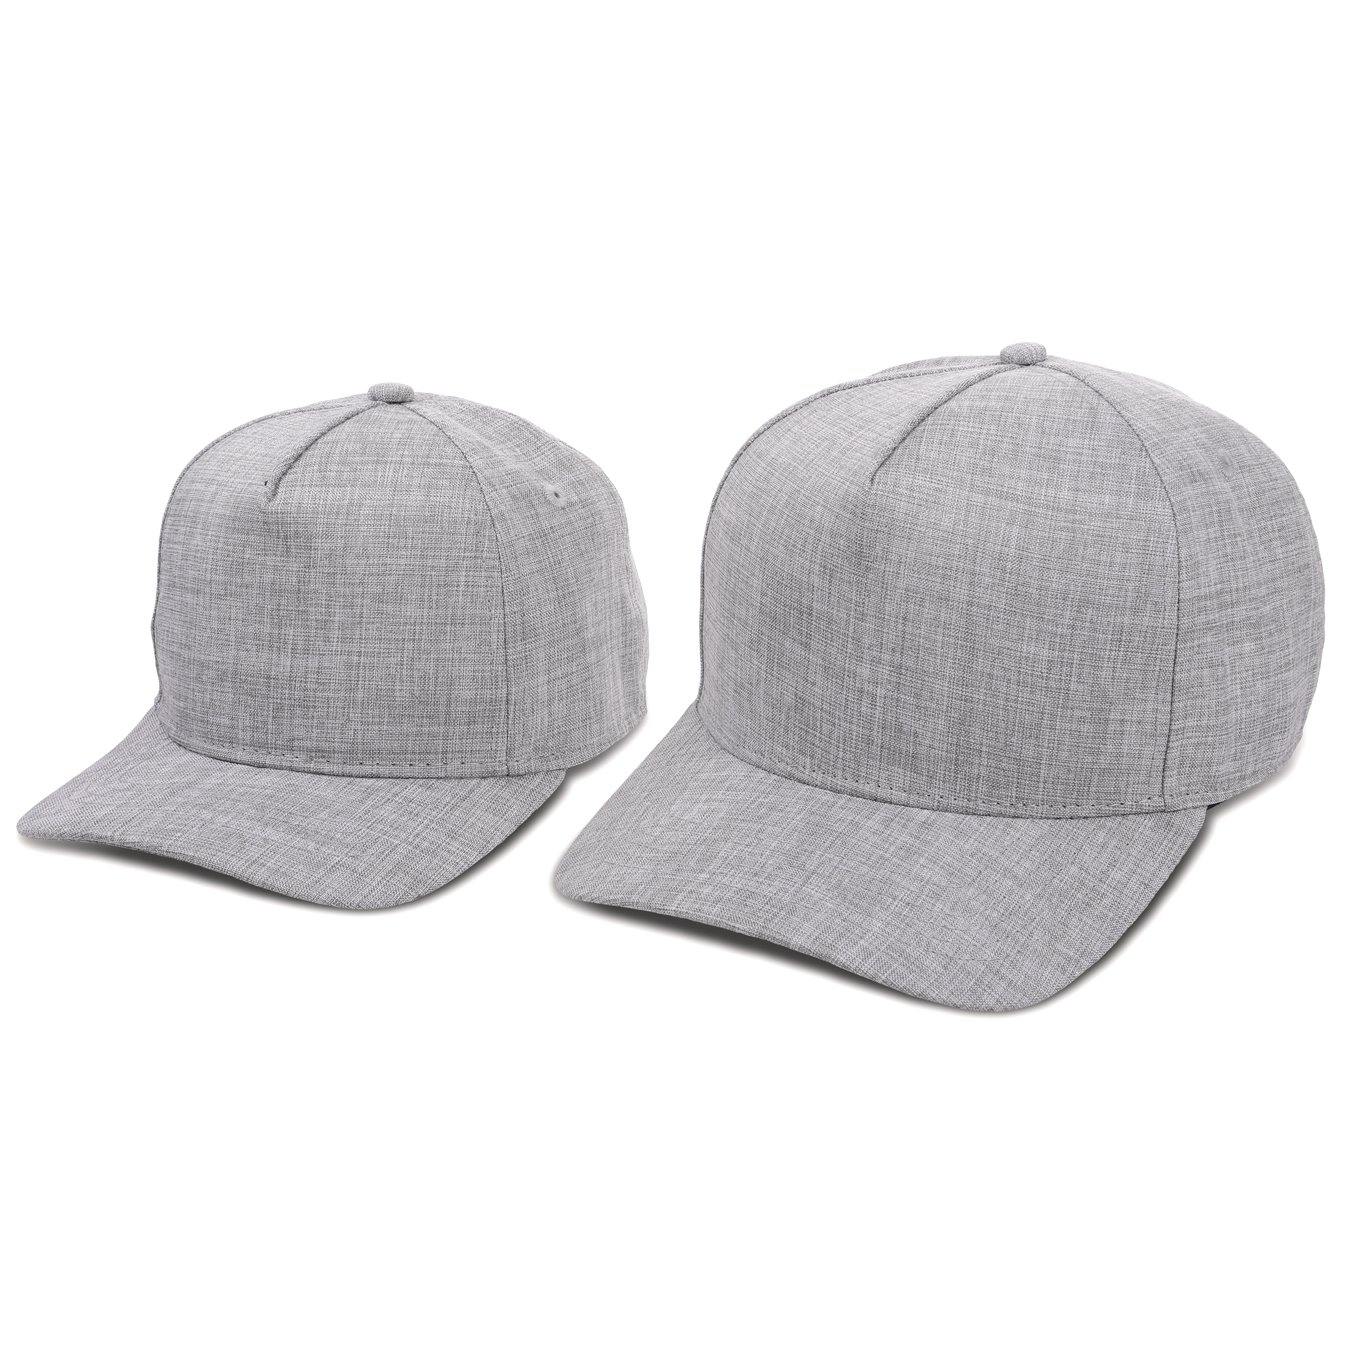 Matching Grey baseball cap for babies, toddlers, kids, men and women. Cubs & Co. Australia